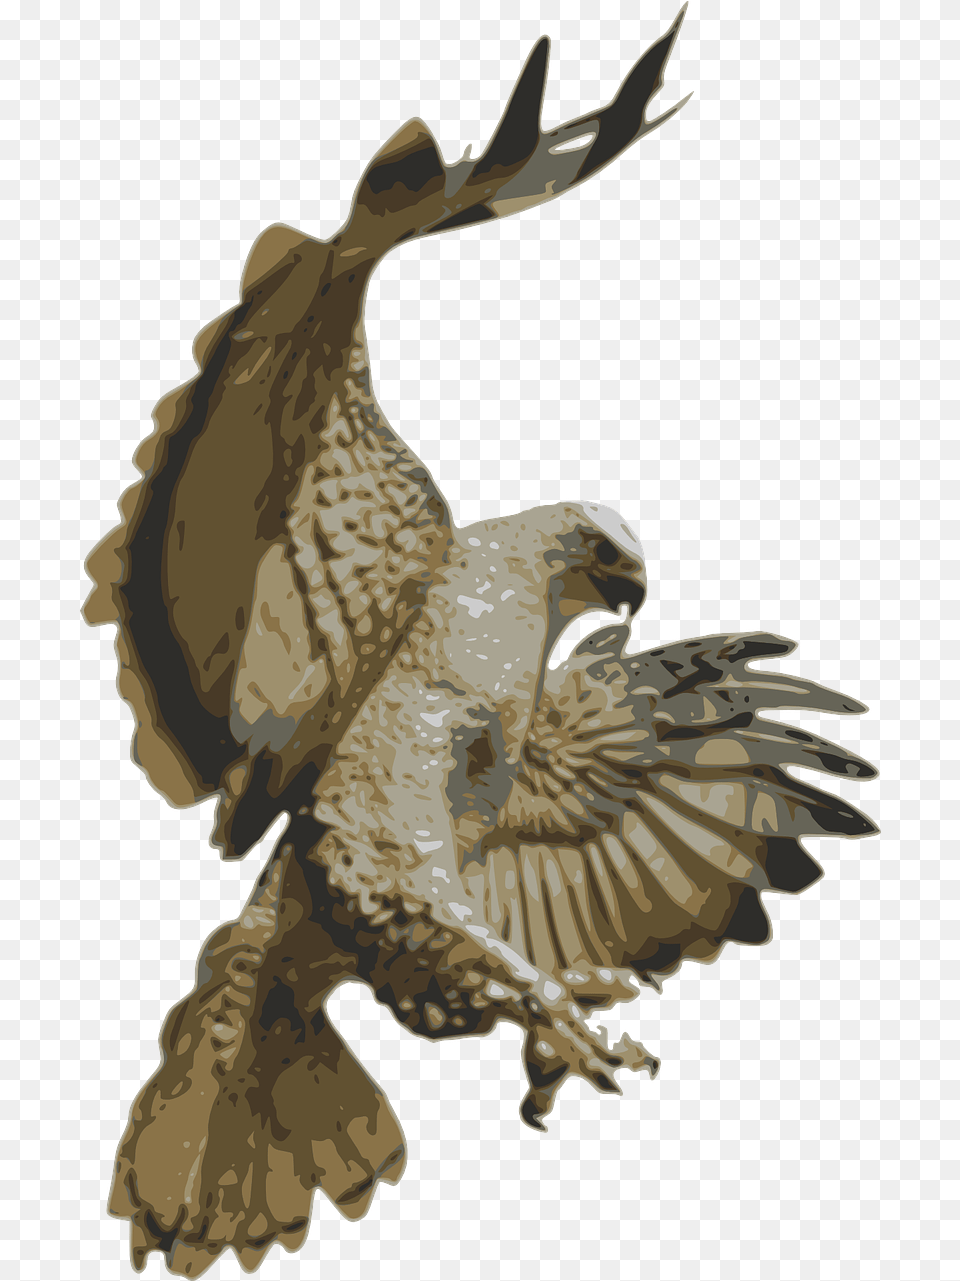 Eagle Bird Flying Flying Hawk, Animal, Buzzard, Vulture, Kite Bird Png